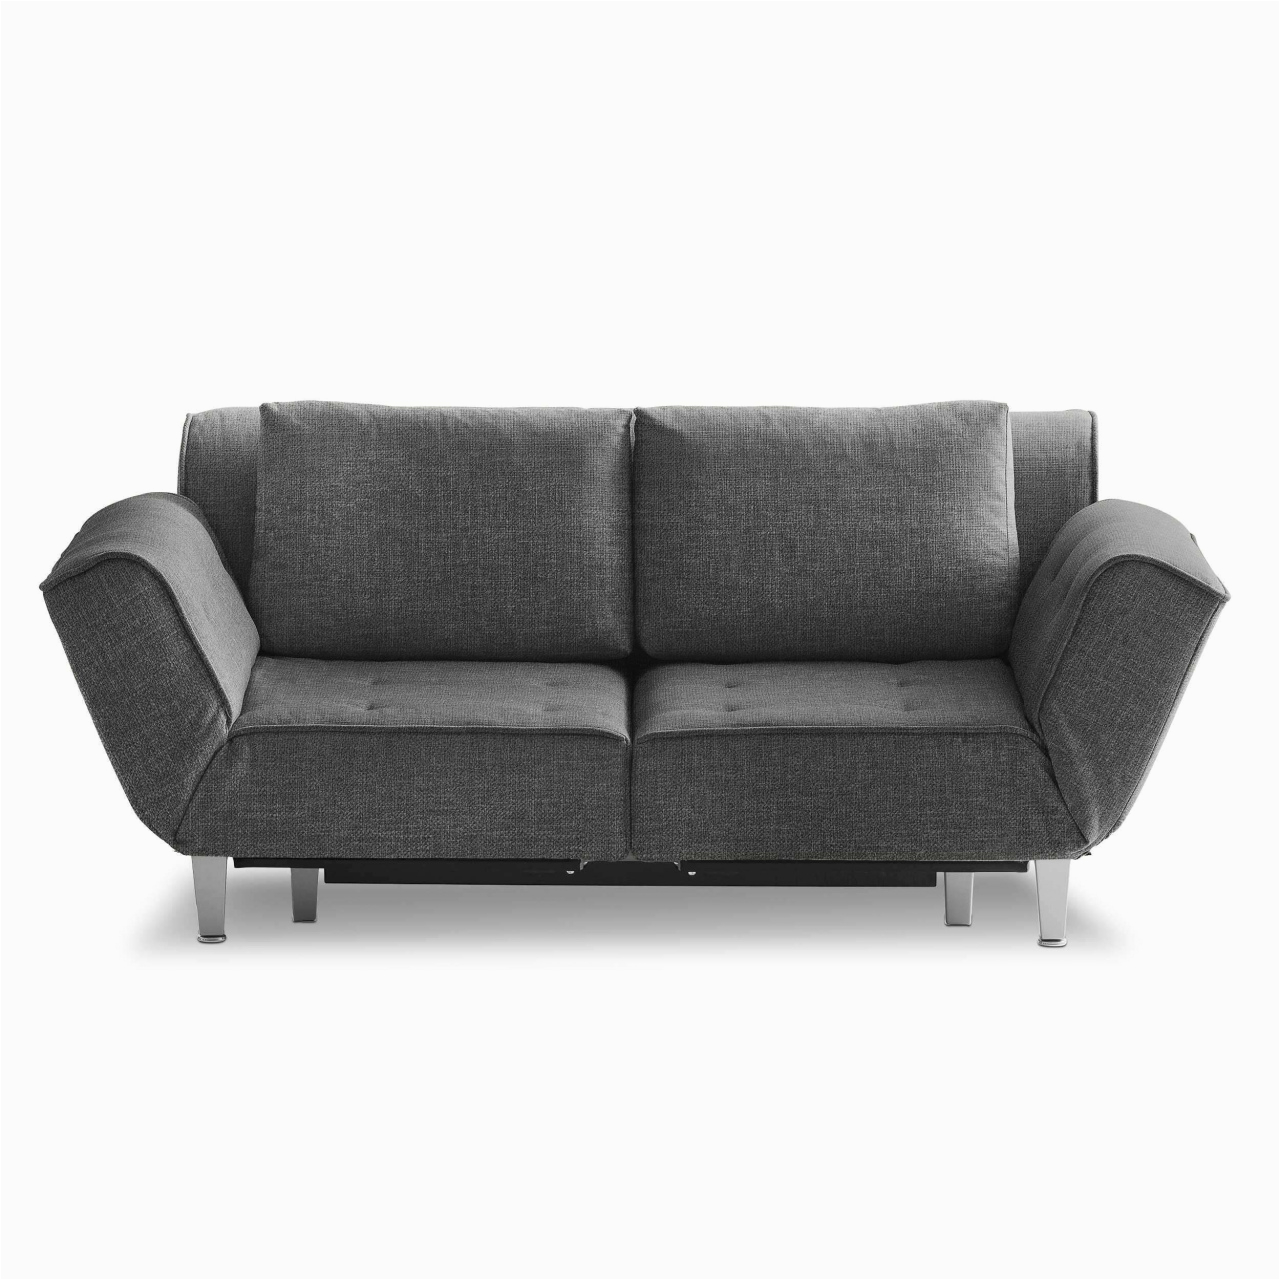 sofa bed couch luxus sofa luxus couch gebraucht kaufen luxus sofa grau stoff graue durch sofa bed couch